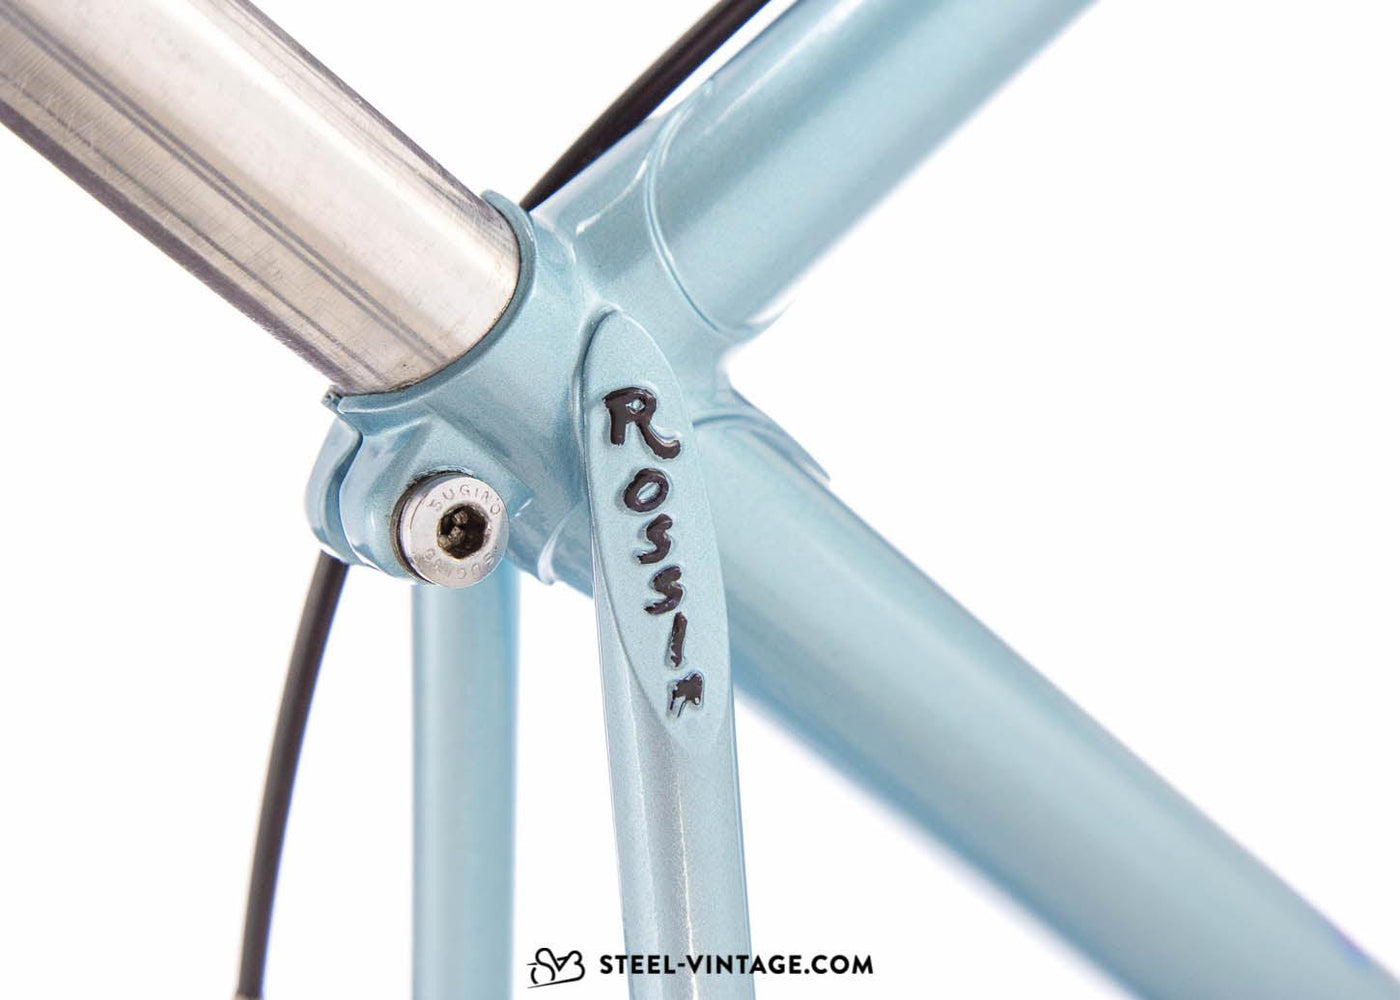 Rossin Record SLX Classic Road Bike 1980s - Steel Vintage Bikes